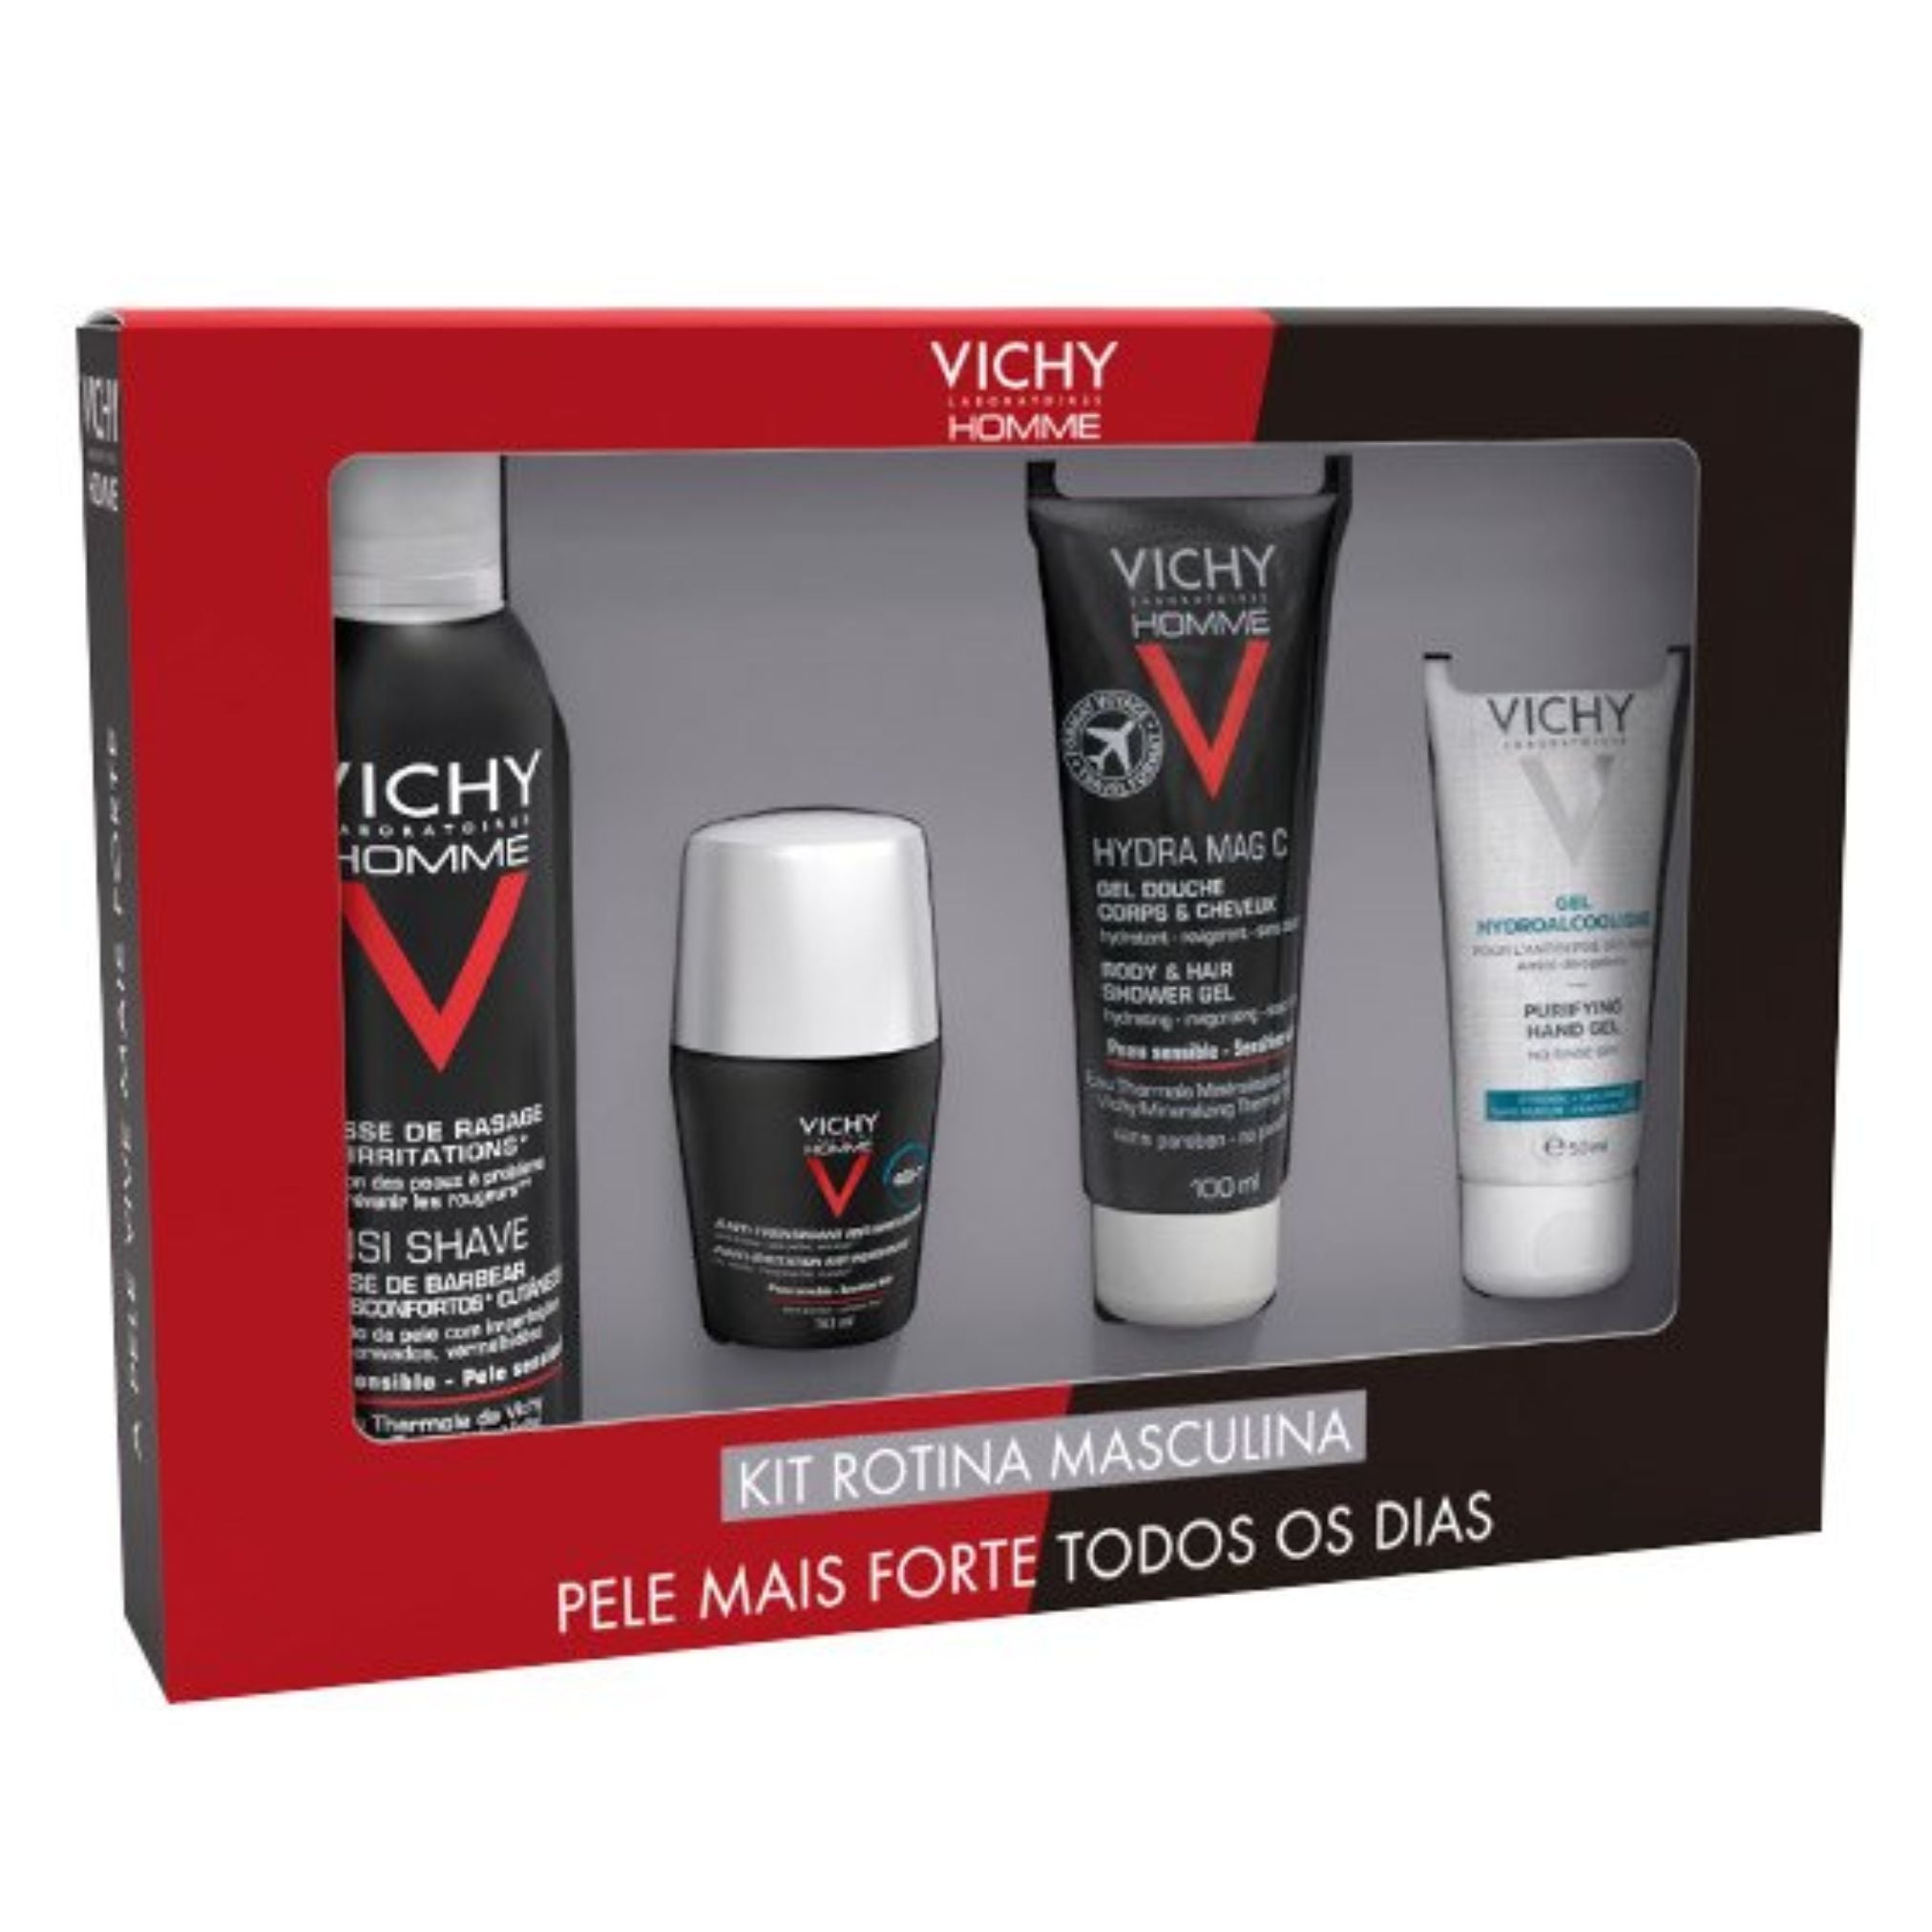 Vichy Pack Promocional: Vichy Homme Kit Rotina Diária